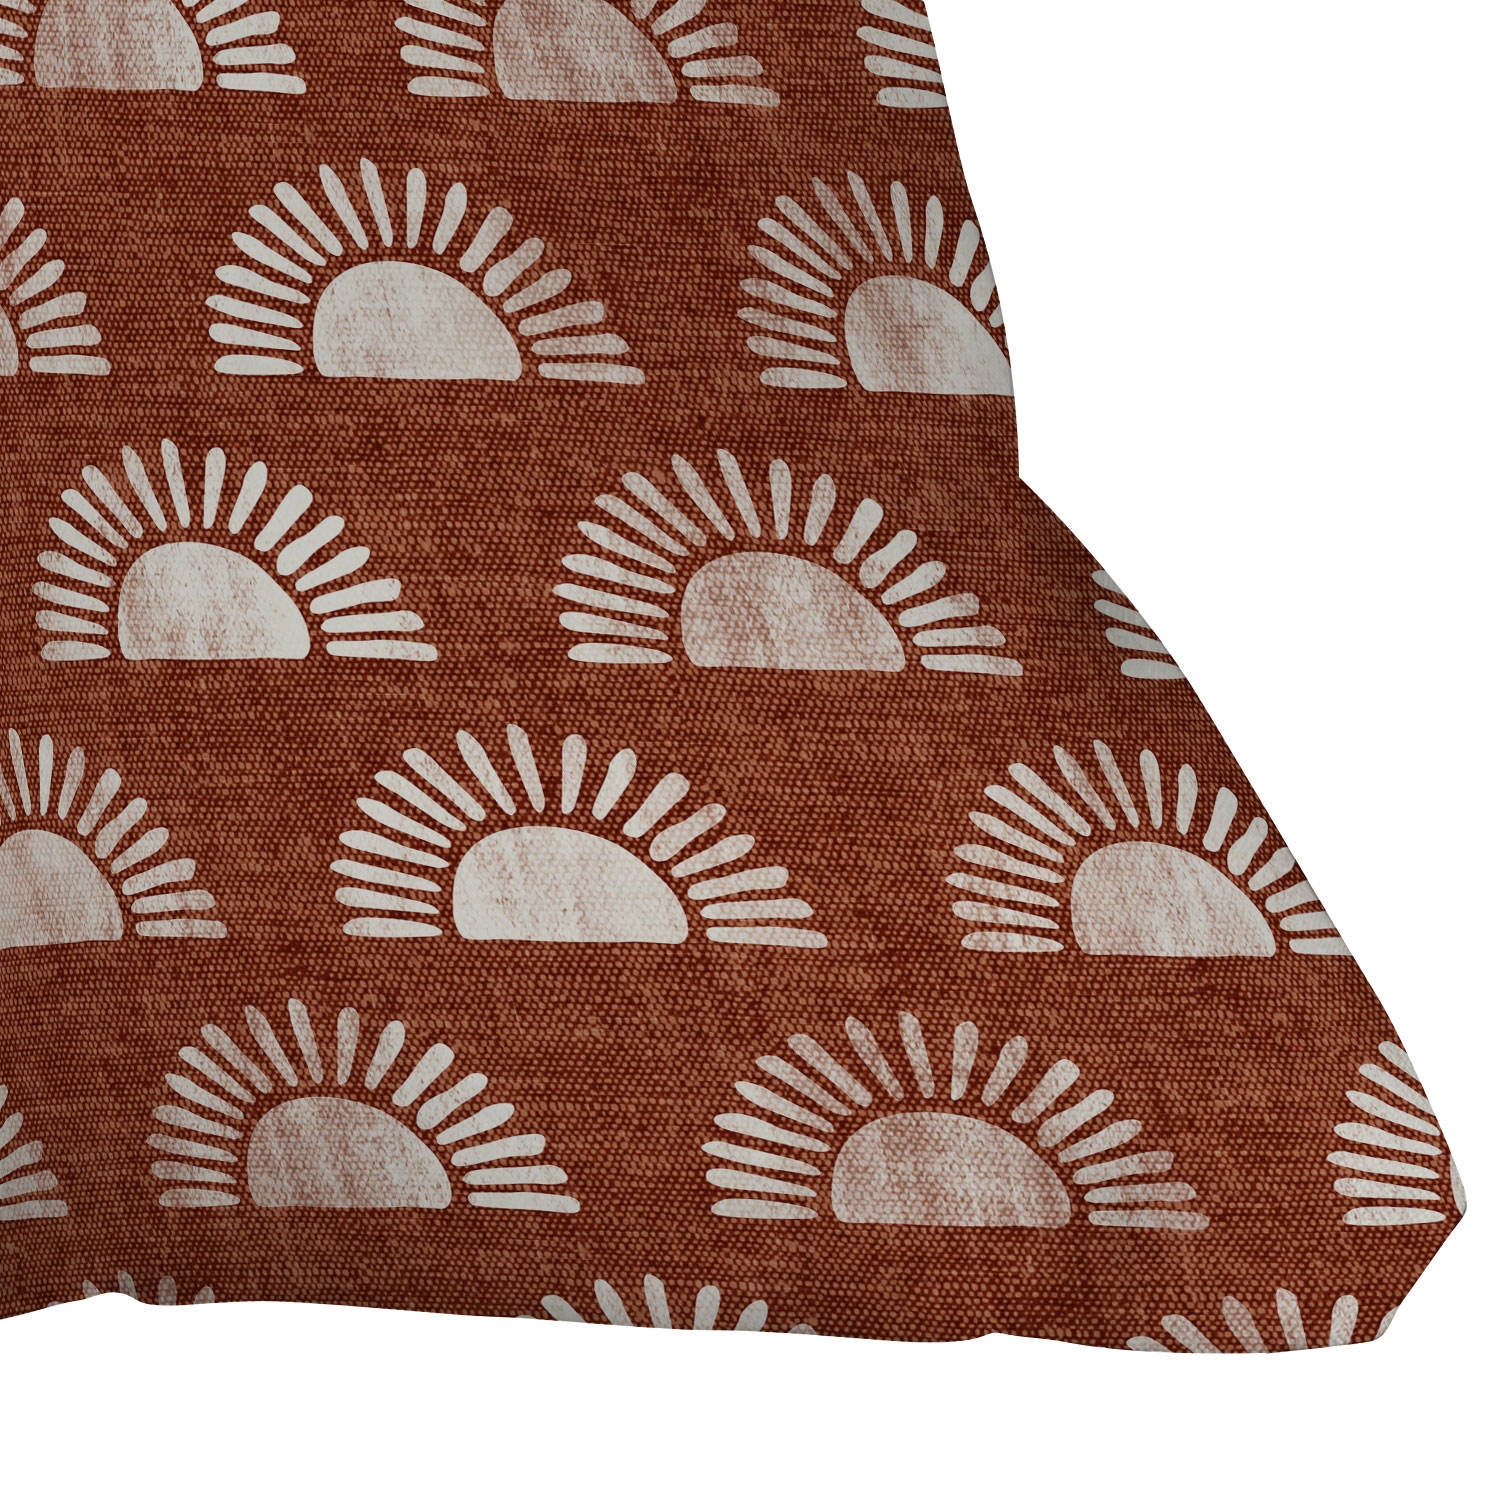 Block Print Suns On Rust by Little Arrow Design Co - Outdoor Throw Pillow 20" x 20" - Image 2